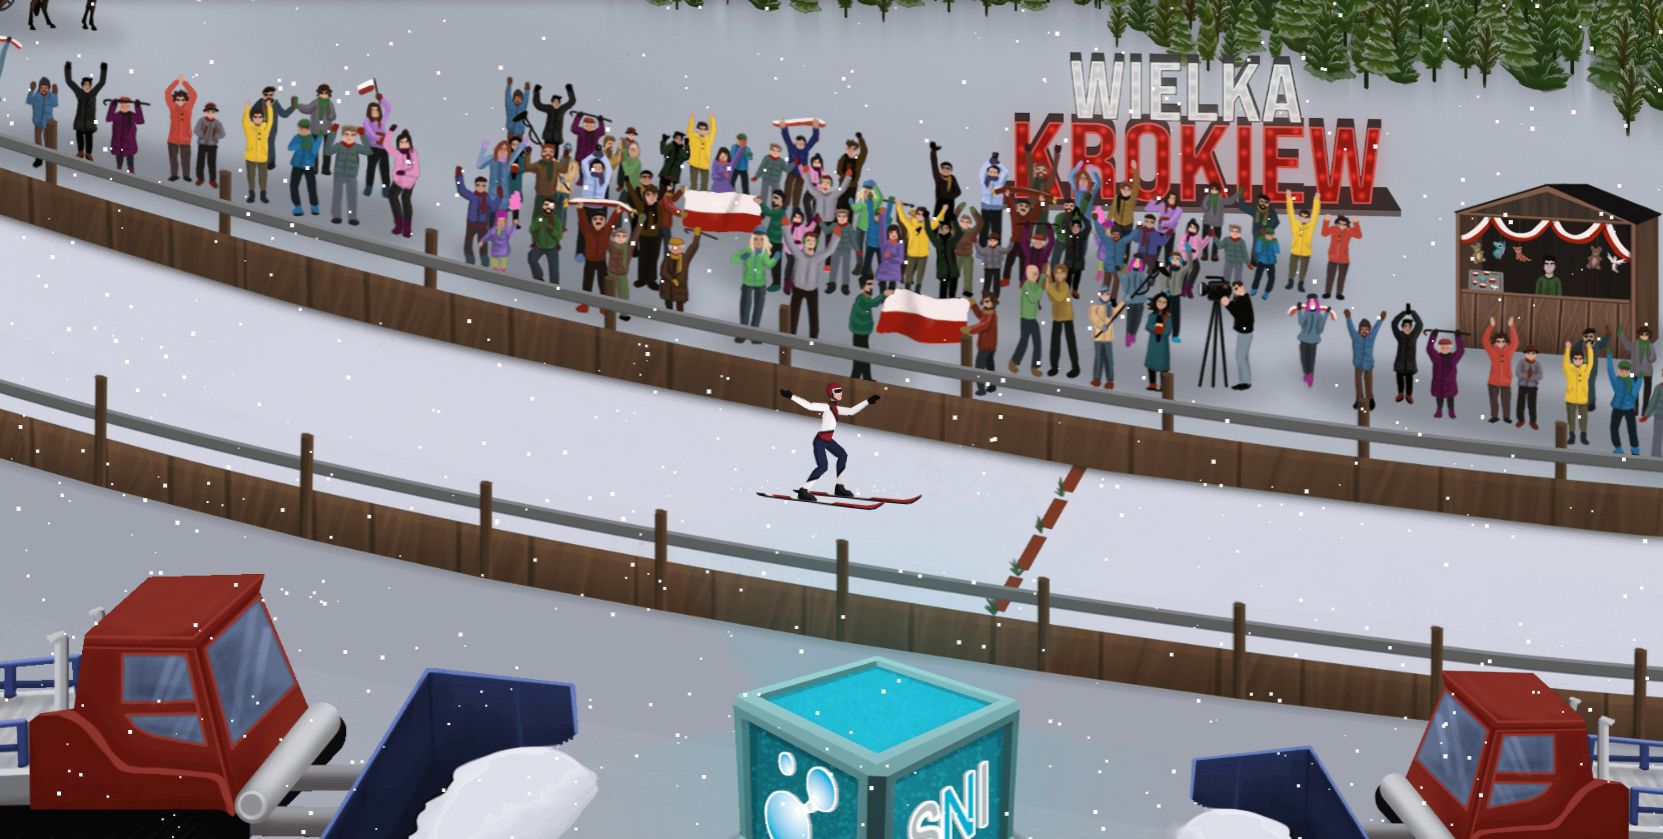 ski jump browser game